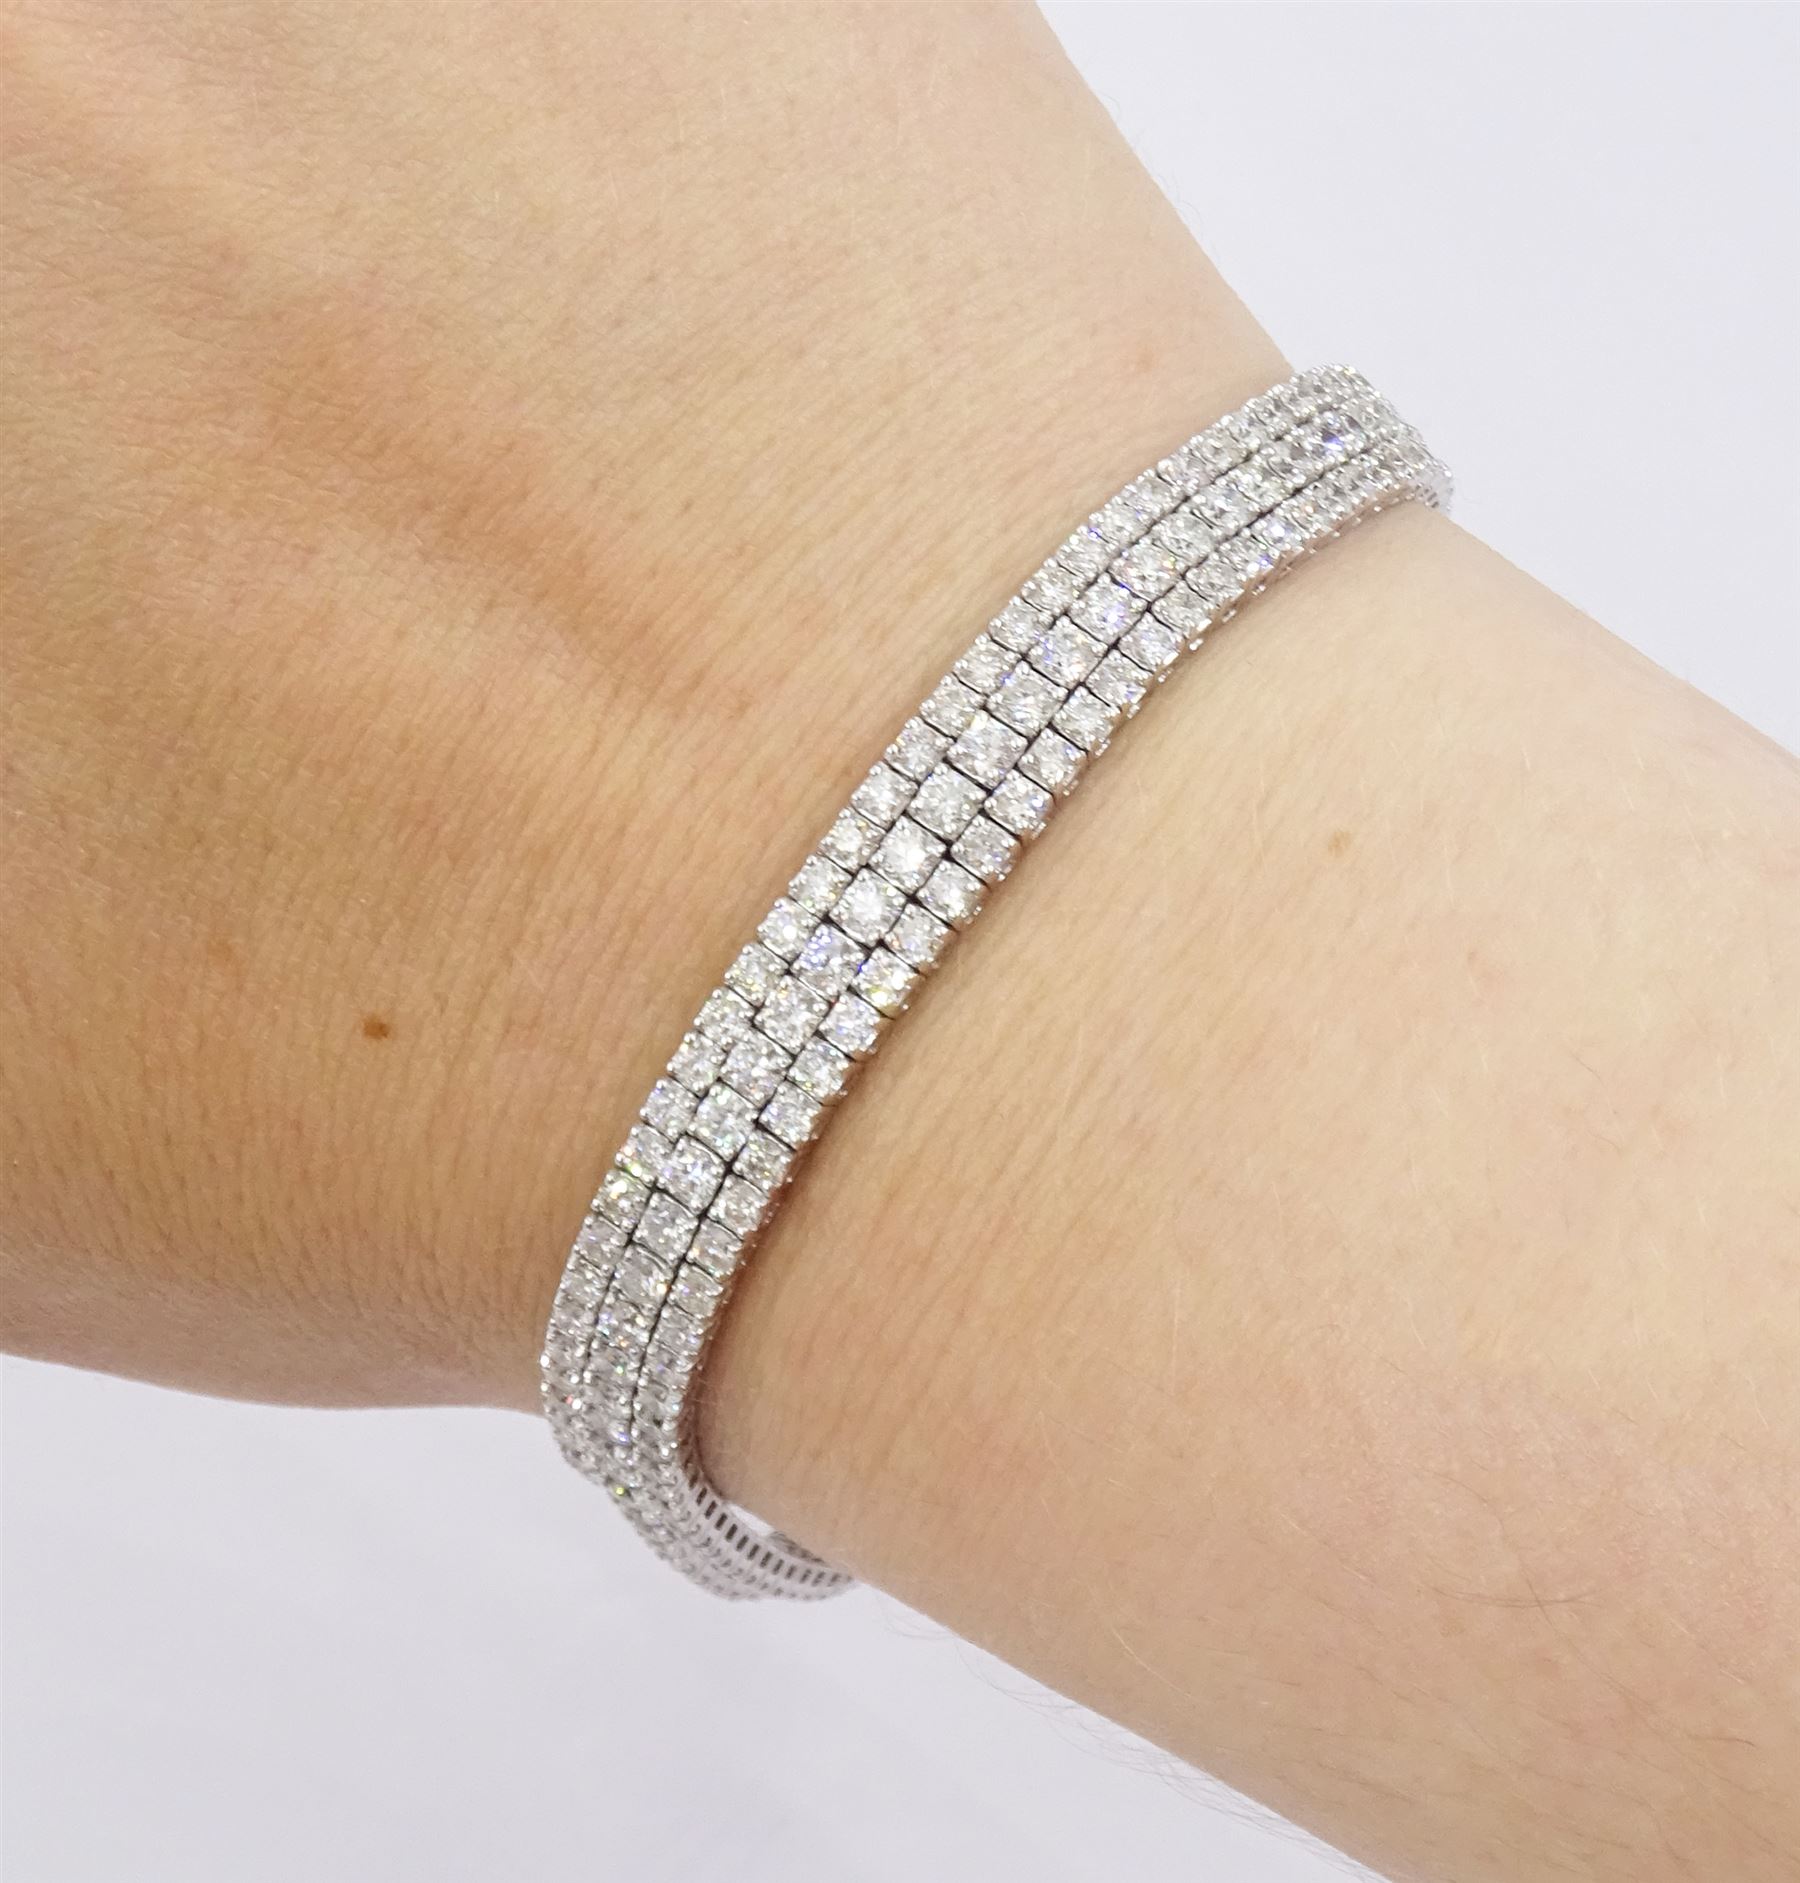 18ct white gold three row round brilliant cut diamond bracelet - Image 2 of 4